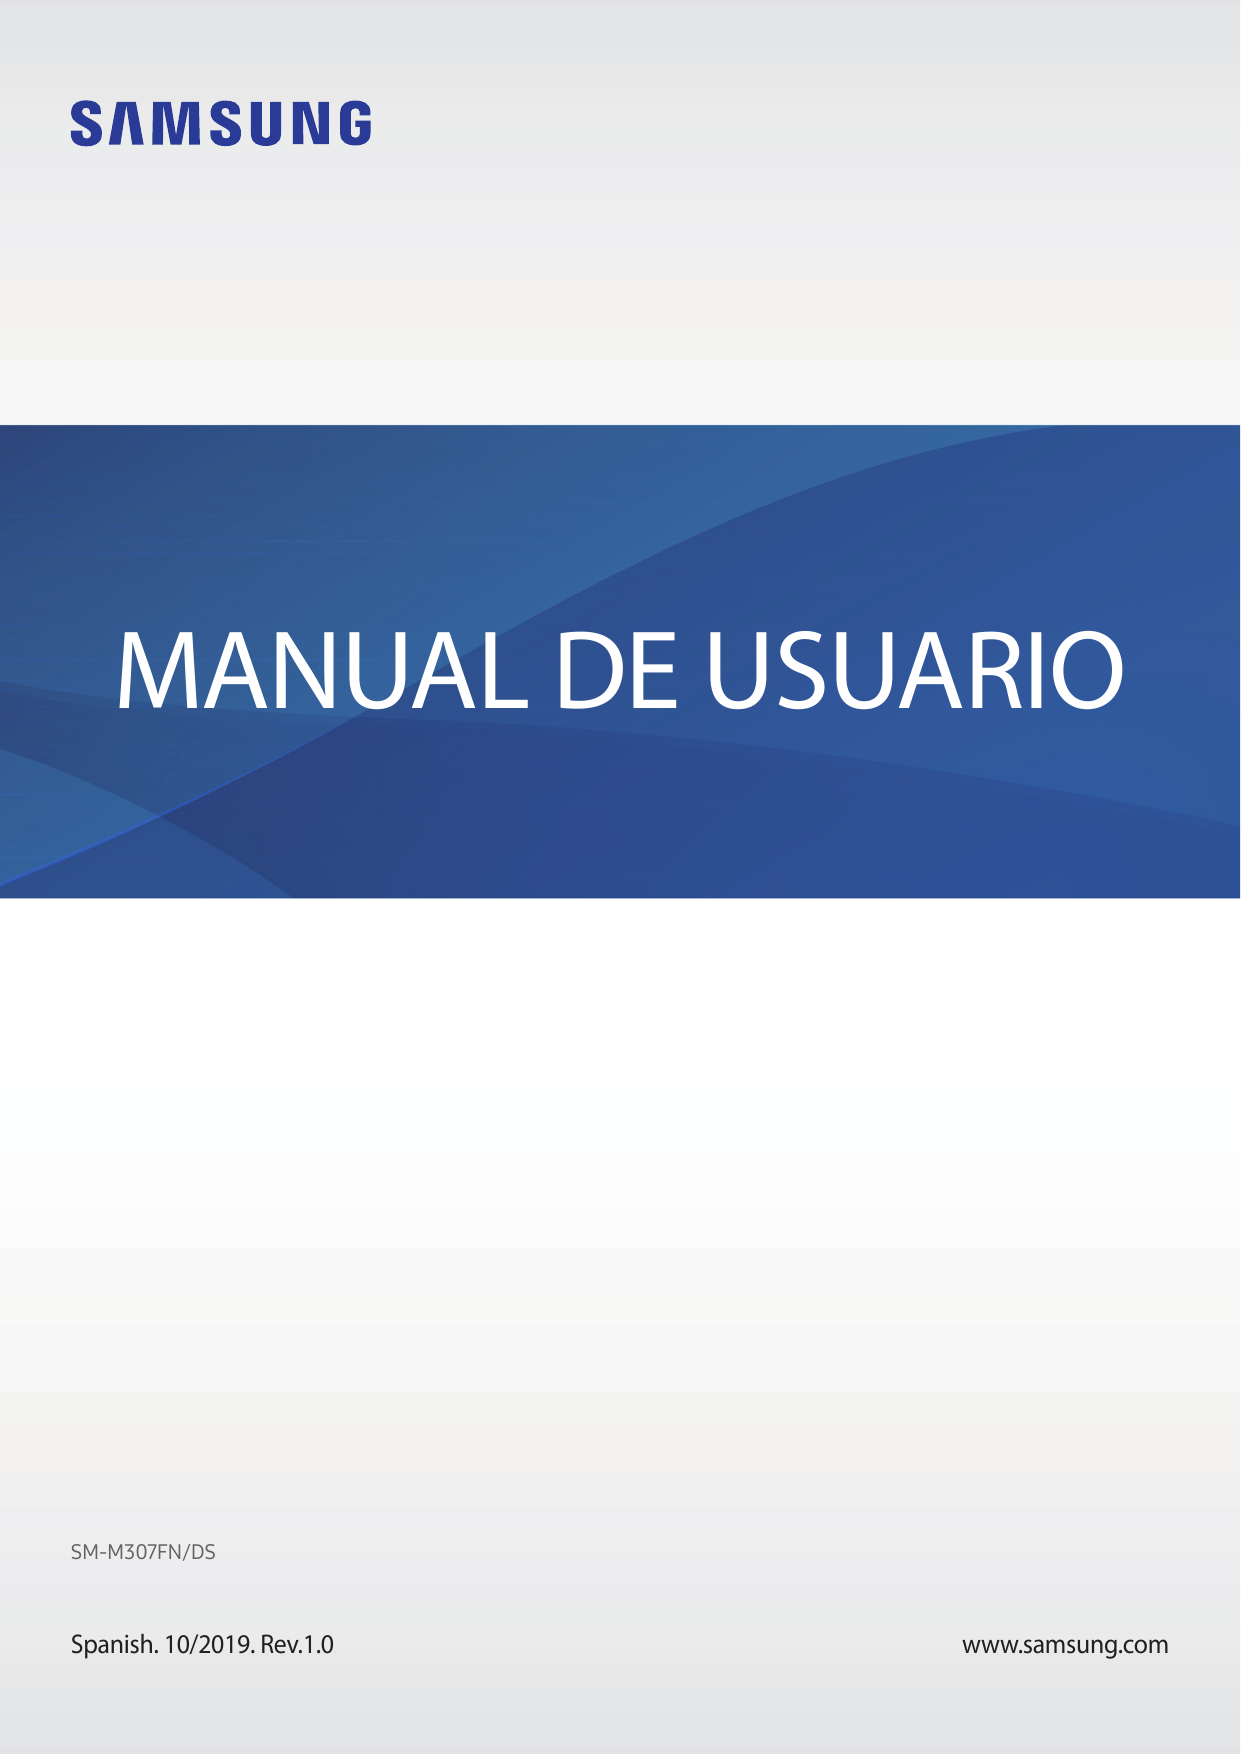 MANUAL DE USUARIOSM-M307FN/DSSpanish. 10/2019. Rev.1.0www.samsung.com